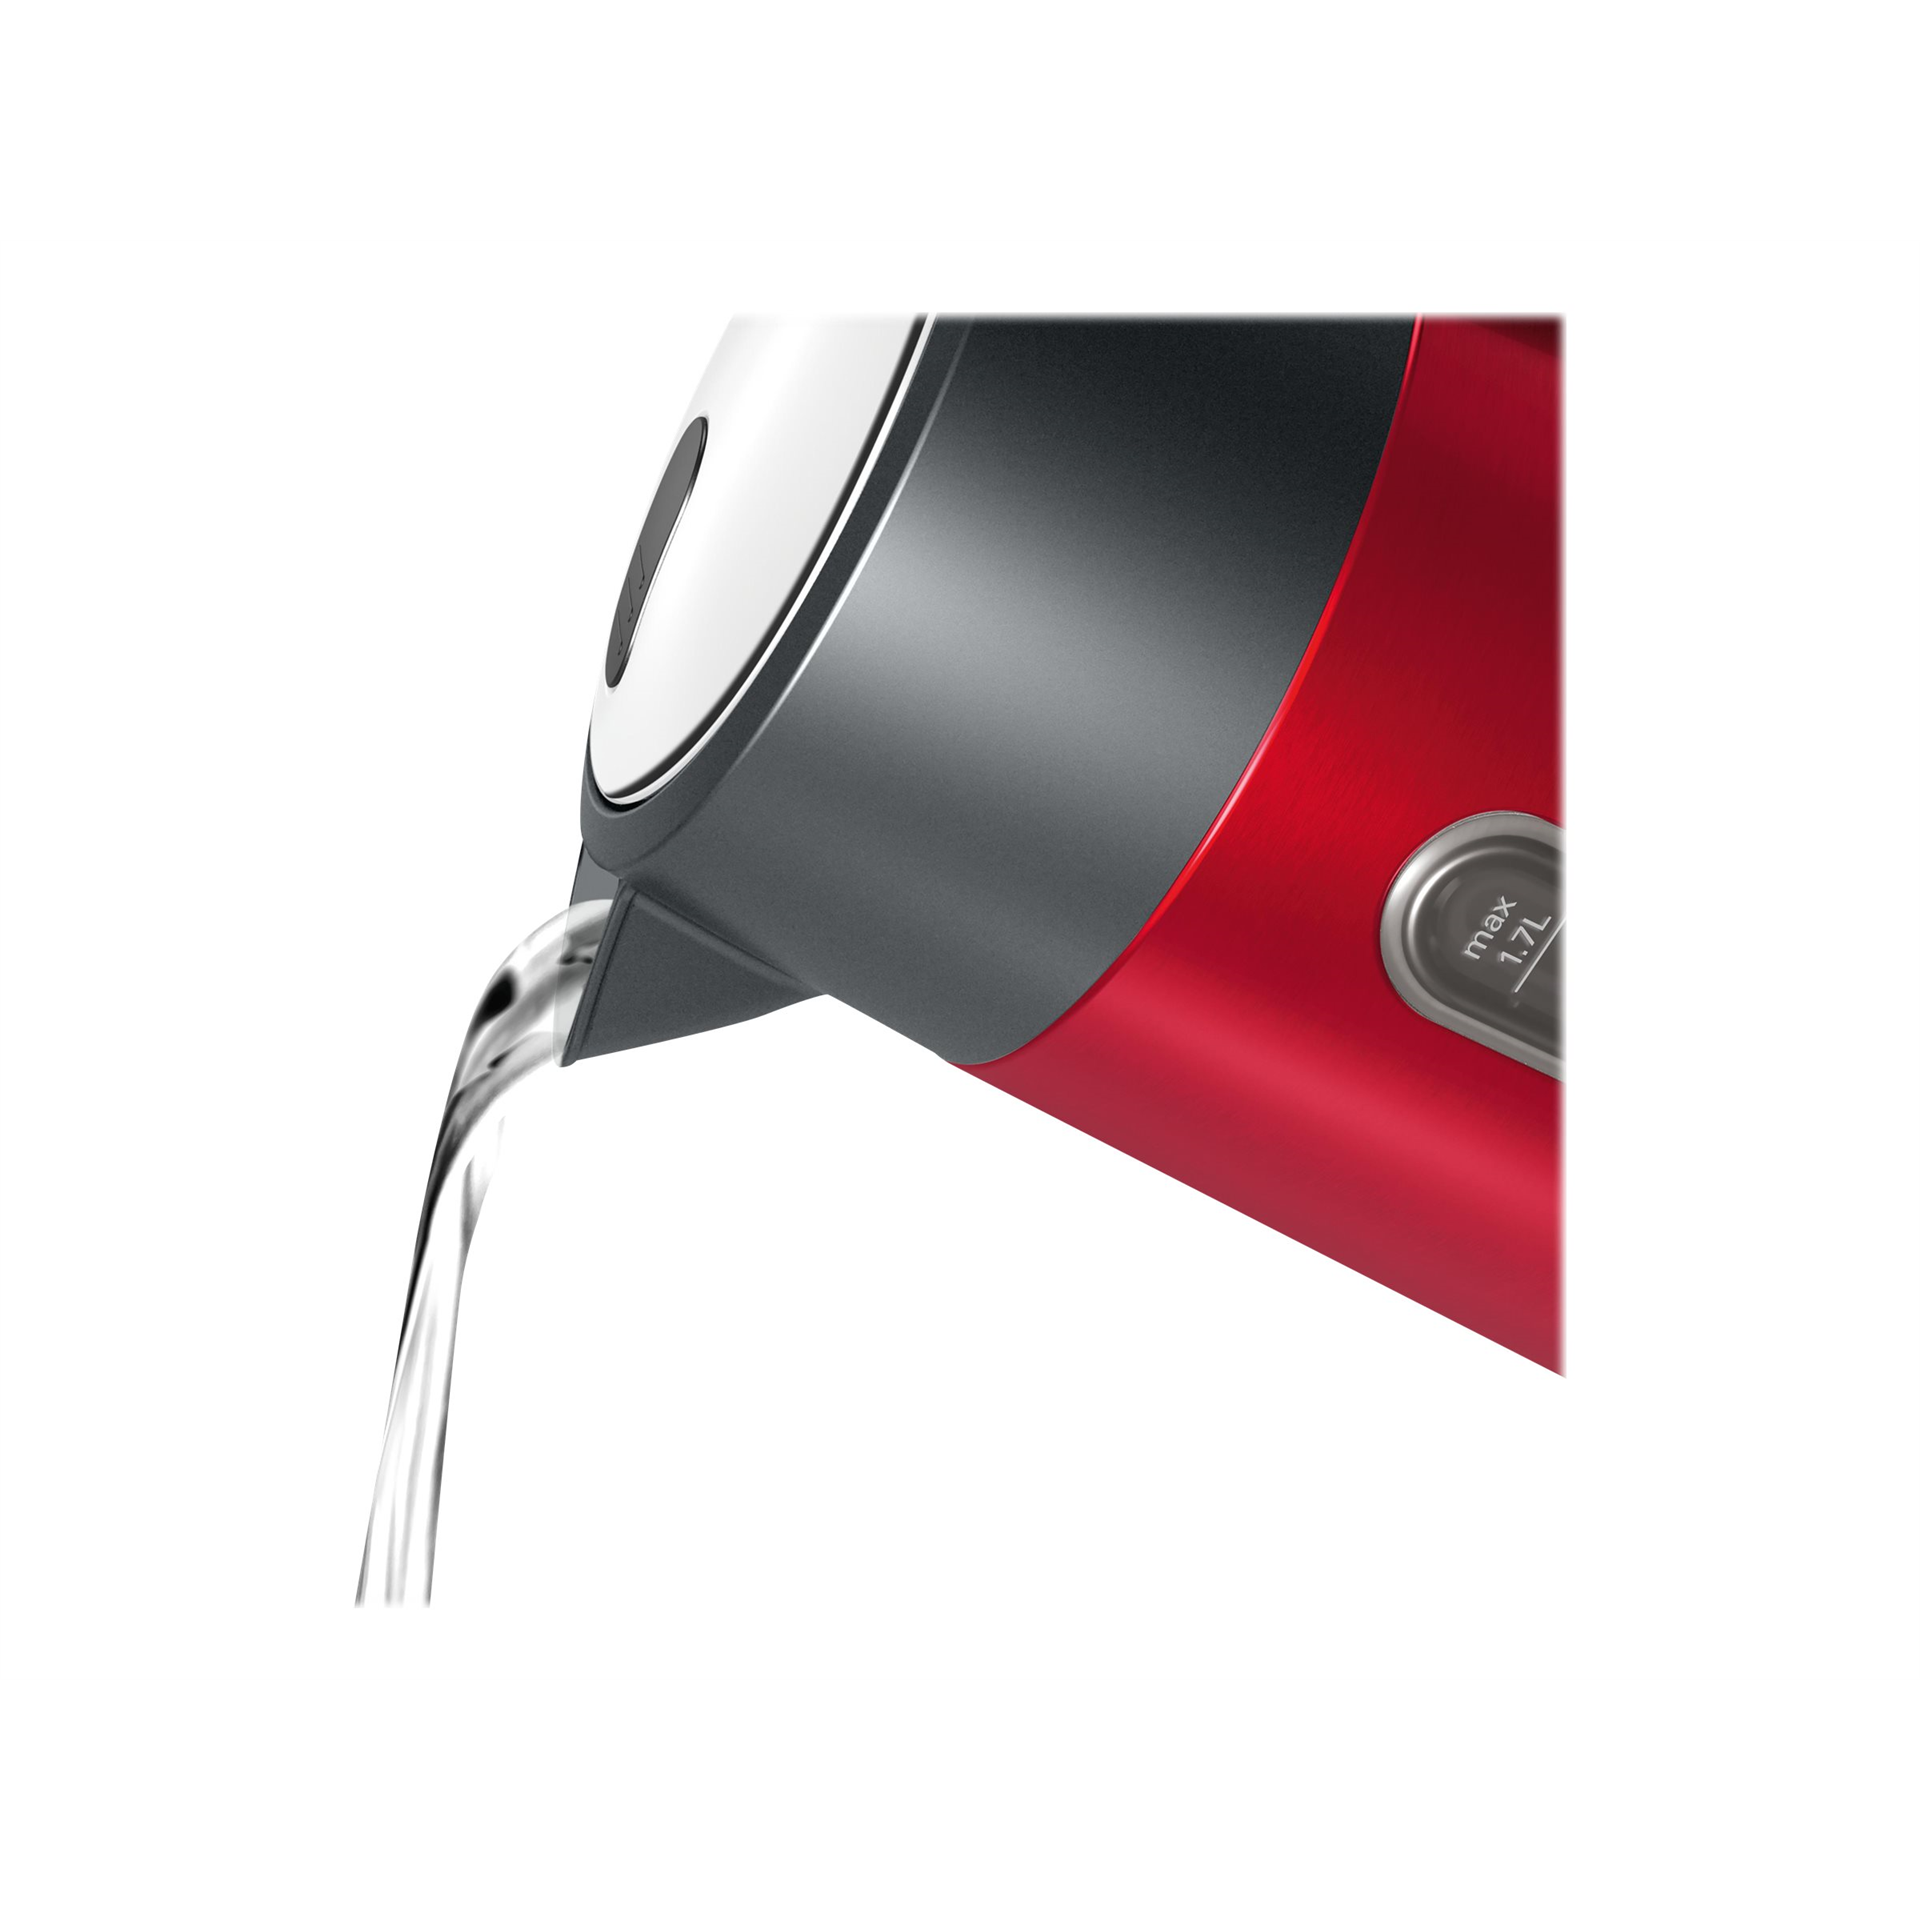 Bosch Kettle DesignLine TWK4P434 Electric 2400 W 1.7 L Stainless steel 360° rotational base Red/Black